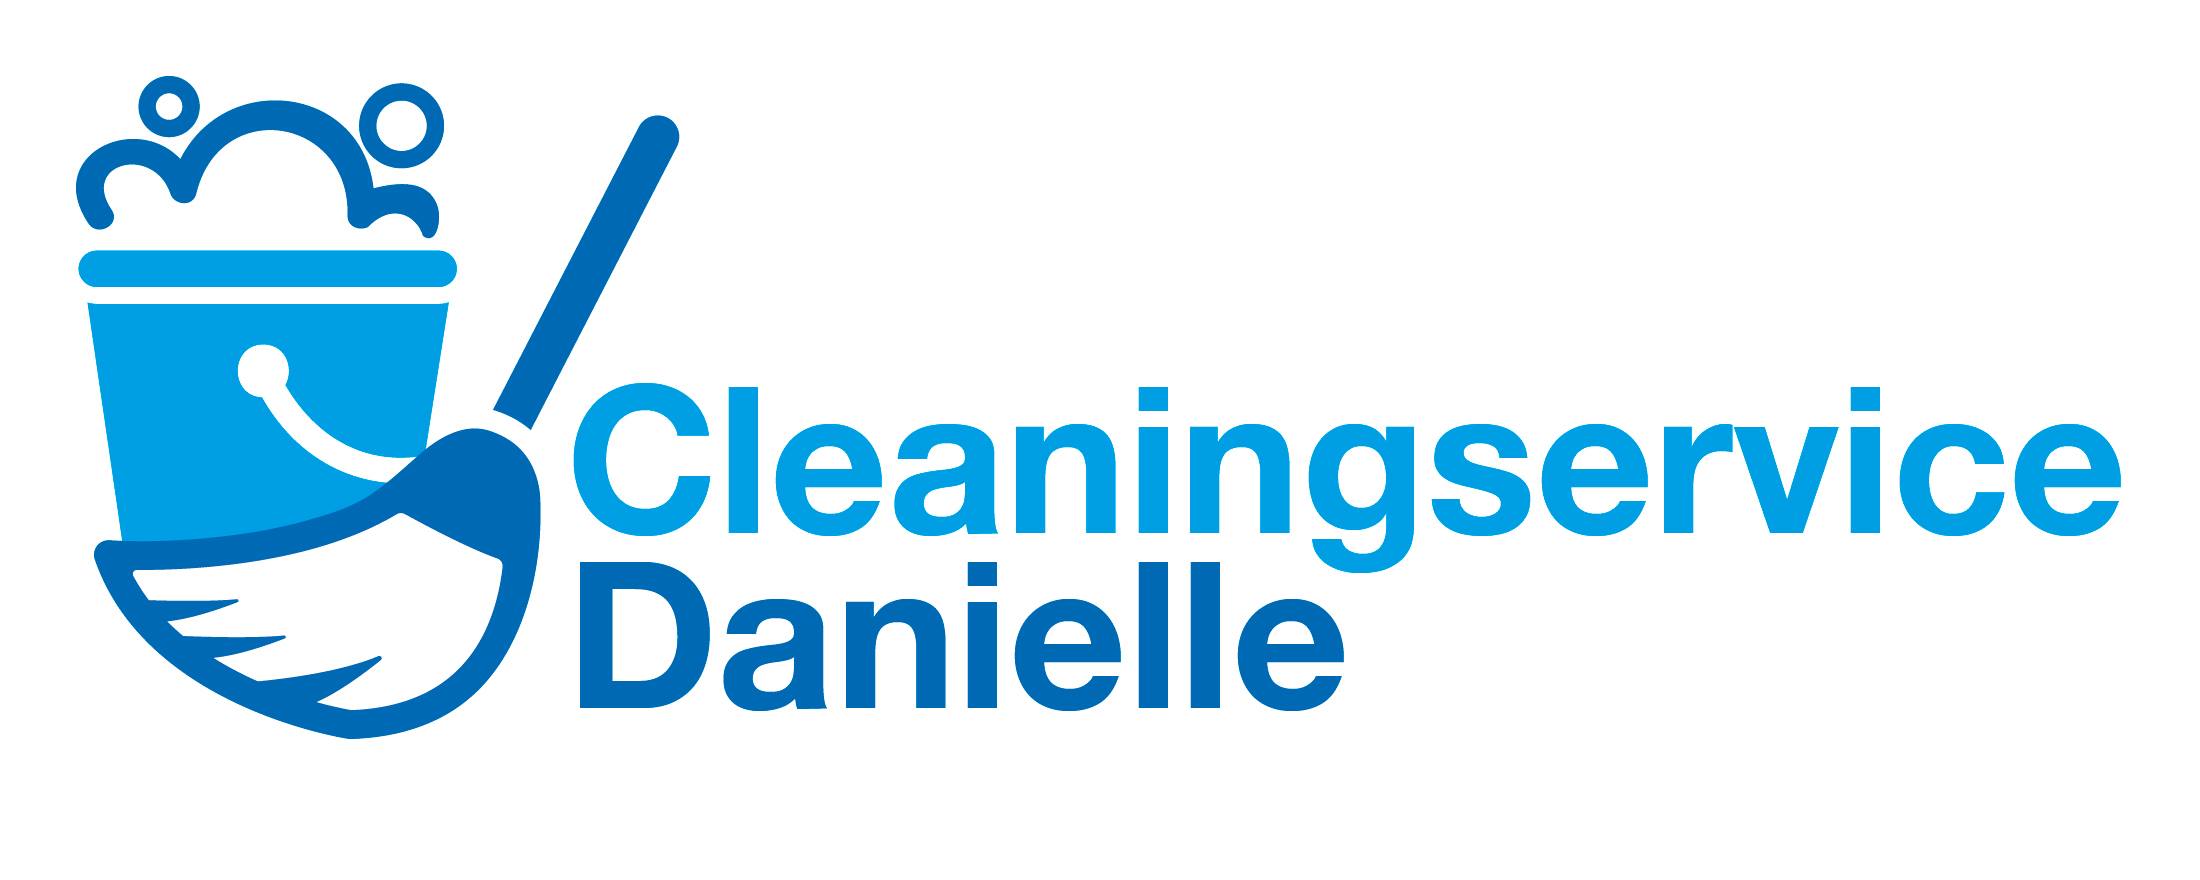 cleaningservice-danielle-logo.jpg